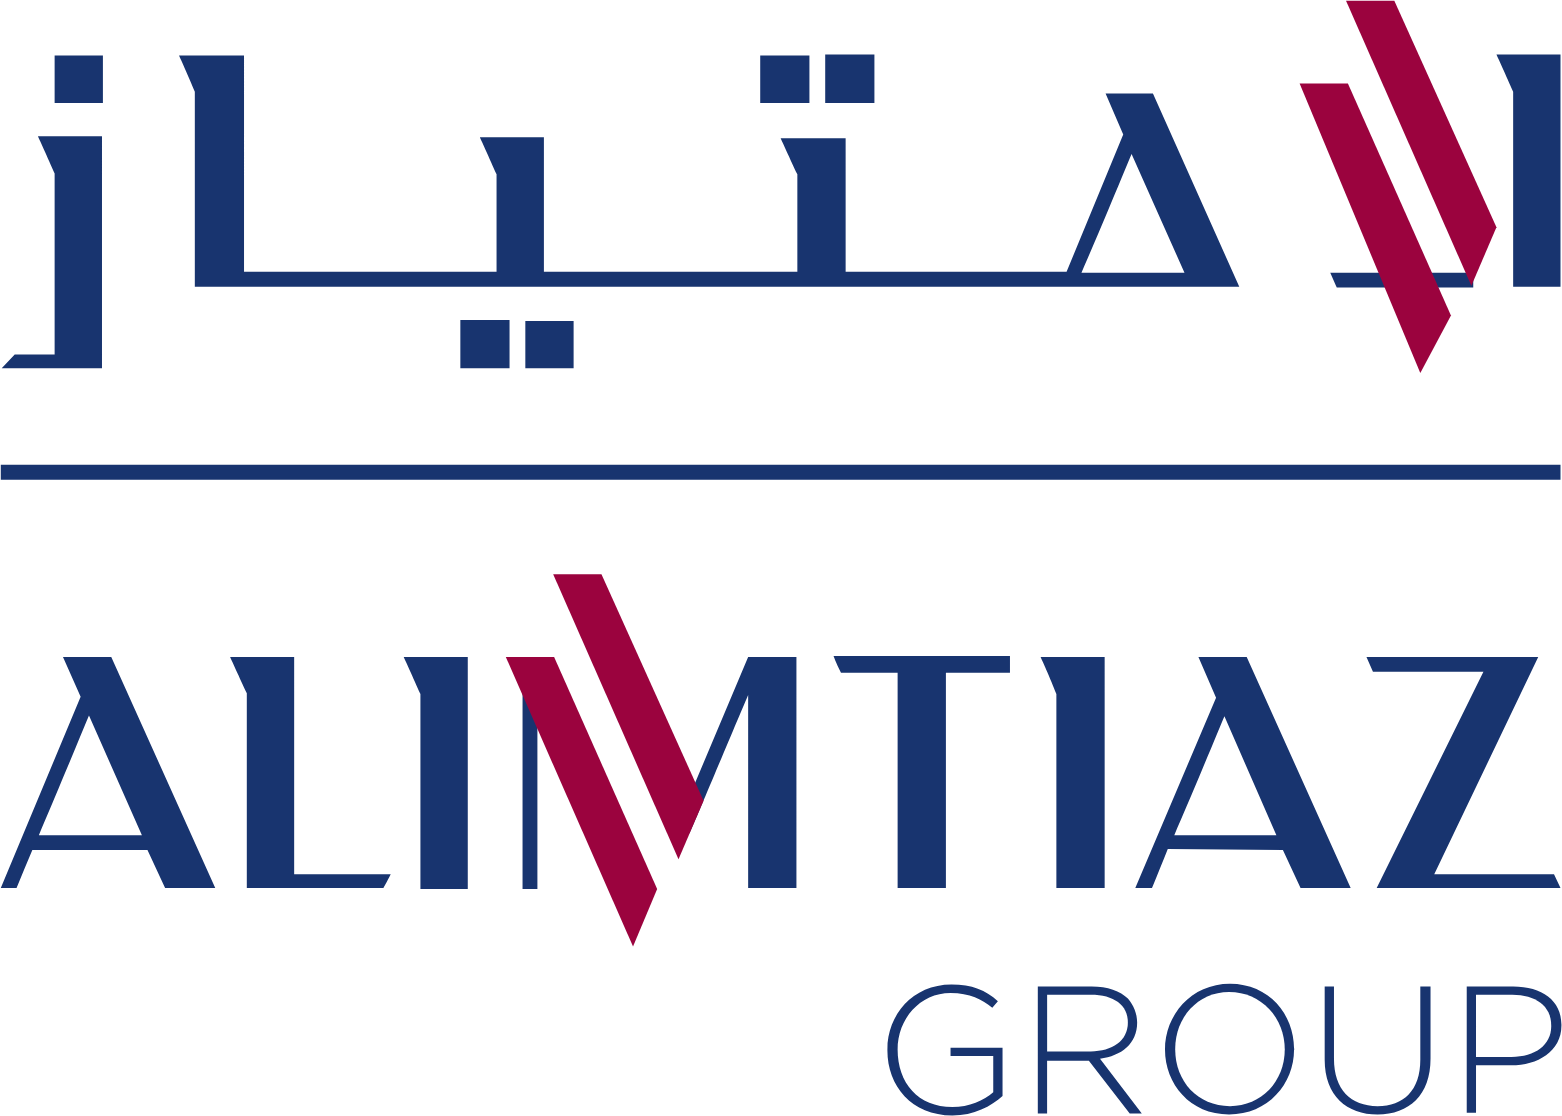 Al Imtiaz Investment Group Company logo large (transparent PNG)